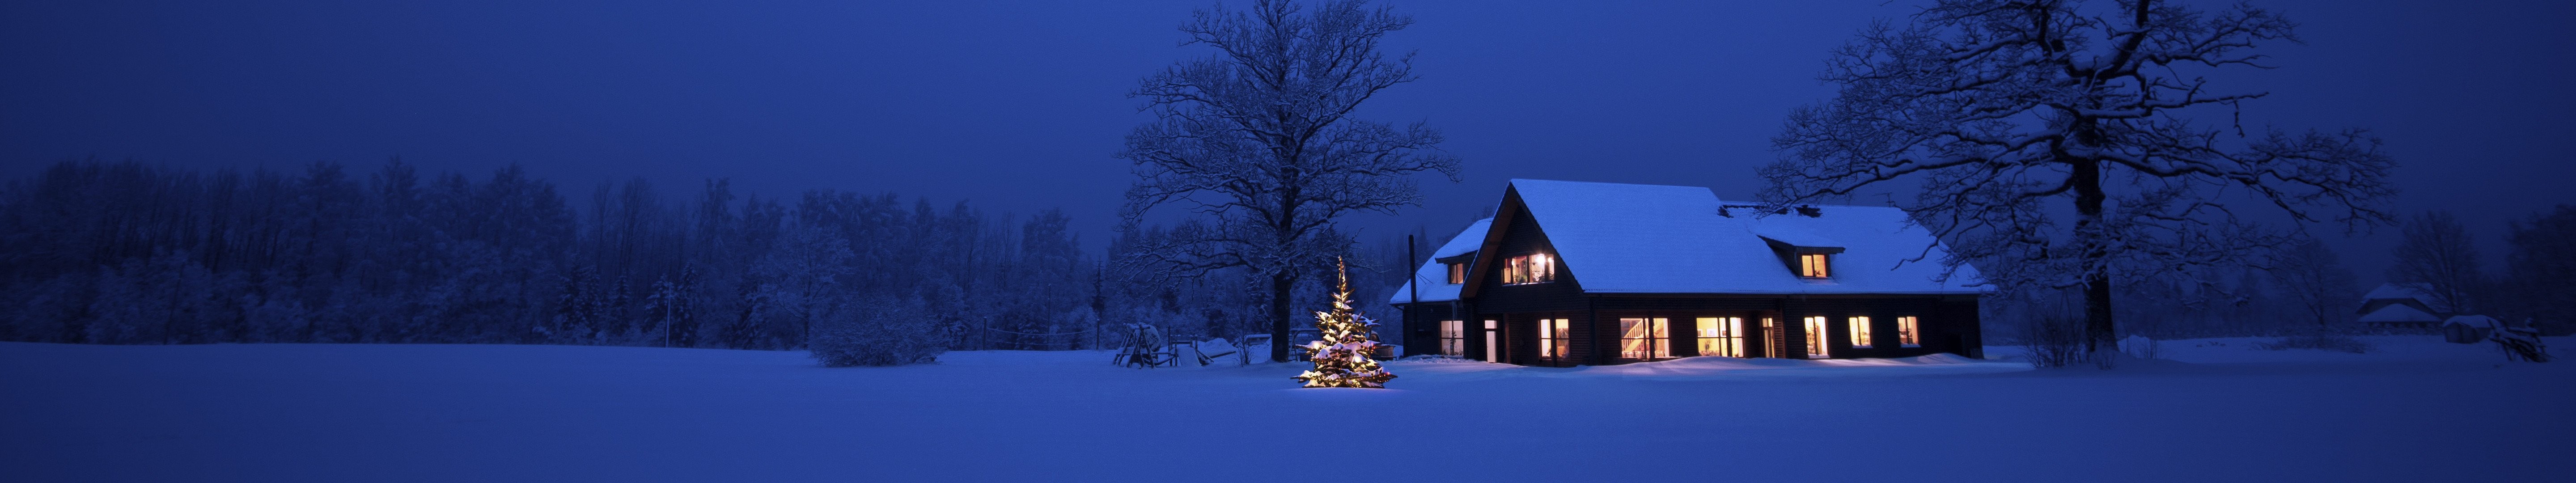 #Christmas Tree, #hut, #holiday, #house, #ultrawide, #winter, # Christmas, #panorama, #blue, #snow, #white, #lights, #trees, #dark, wallpaper. Mocah HD Wallpaper